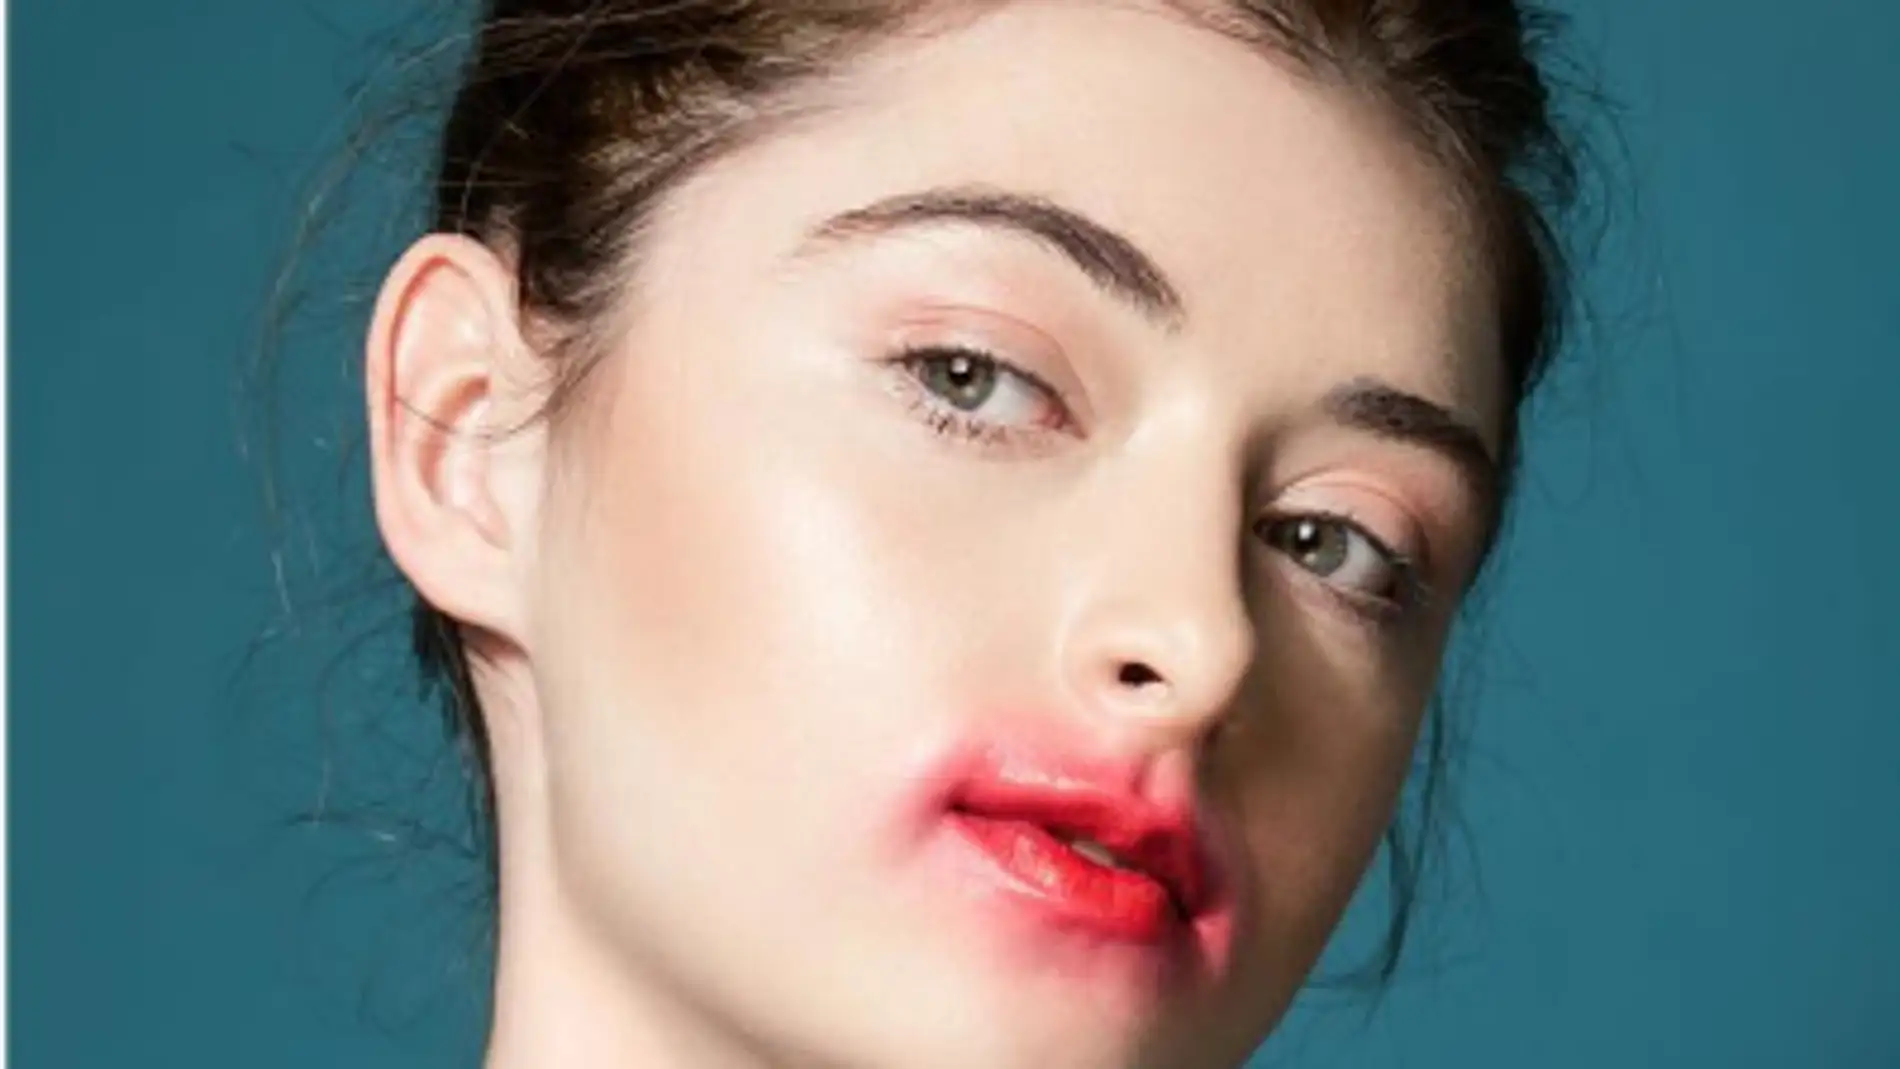 Blurred Lips o 'Labios Vampiro'